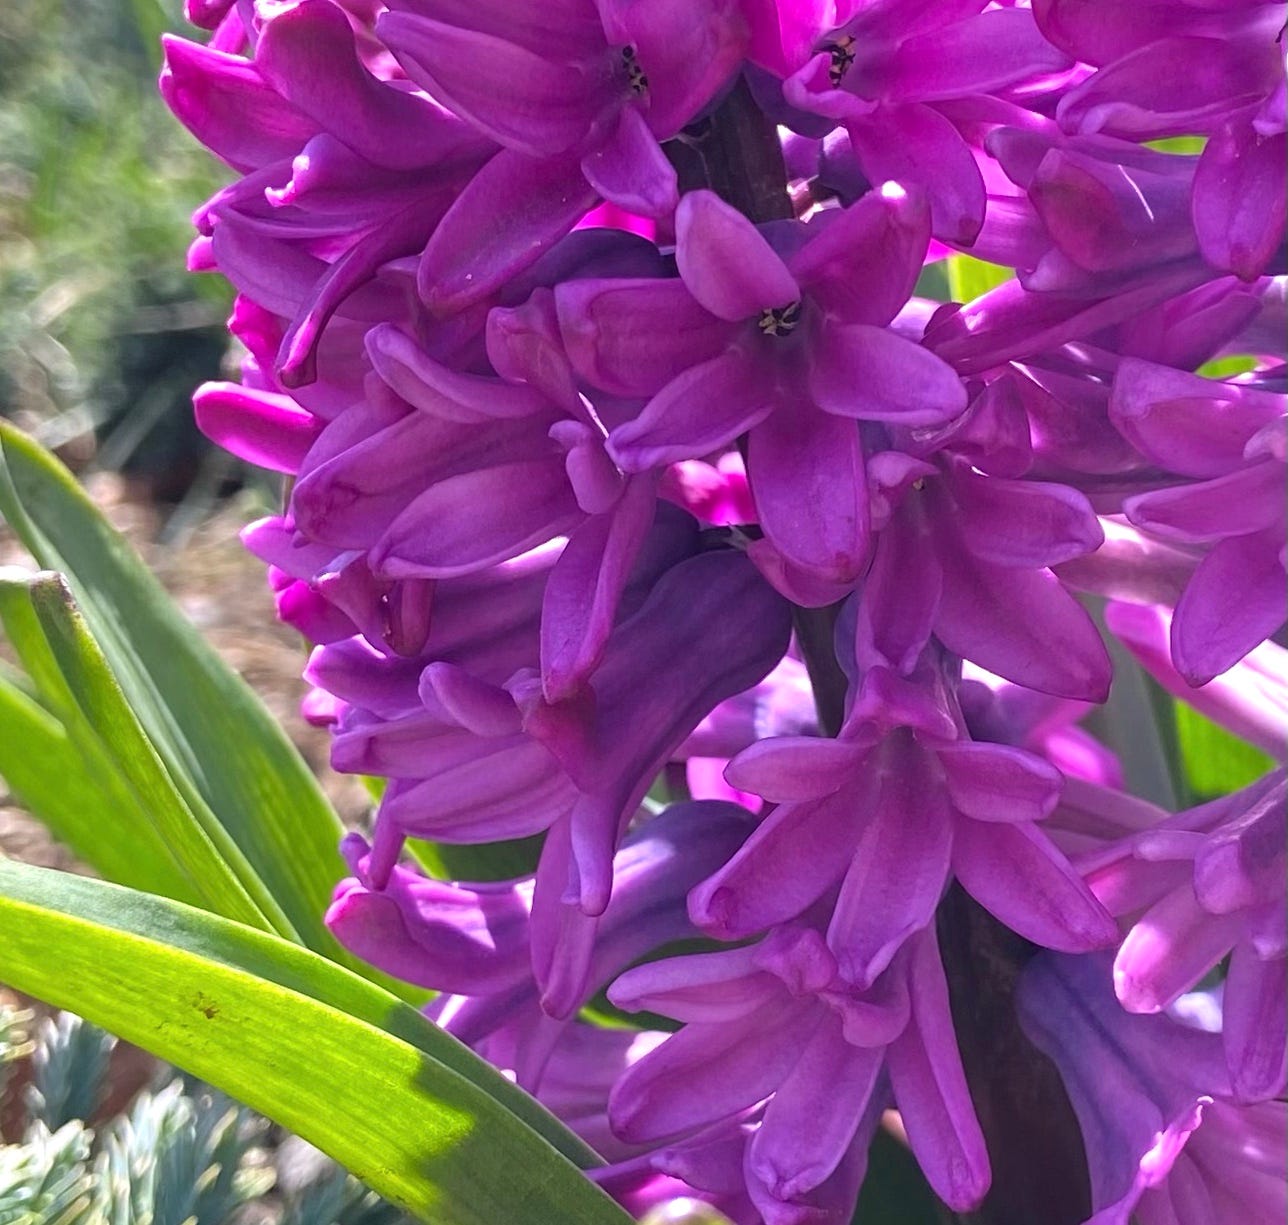 Hyacinths bloom in the sun!